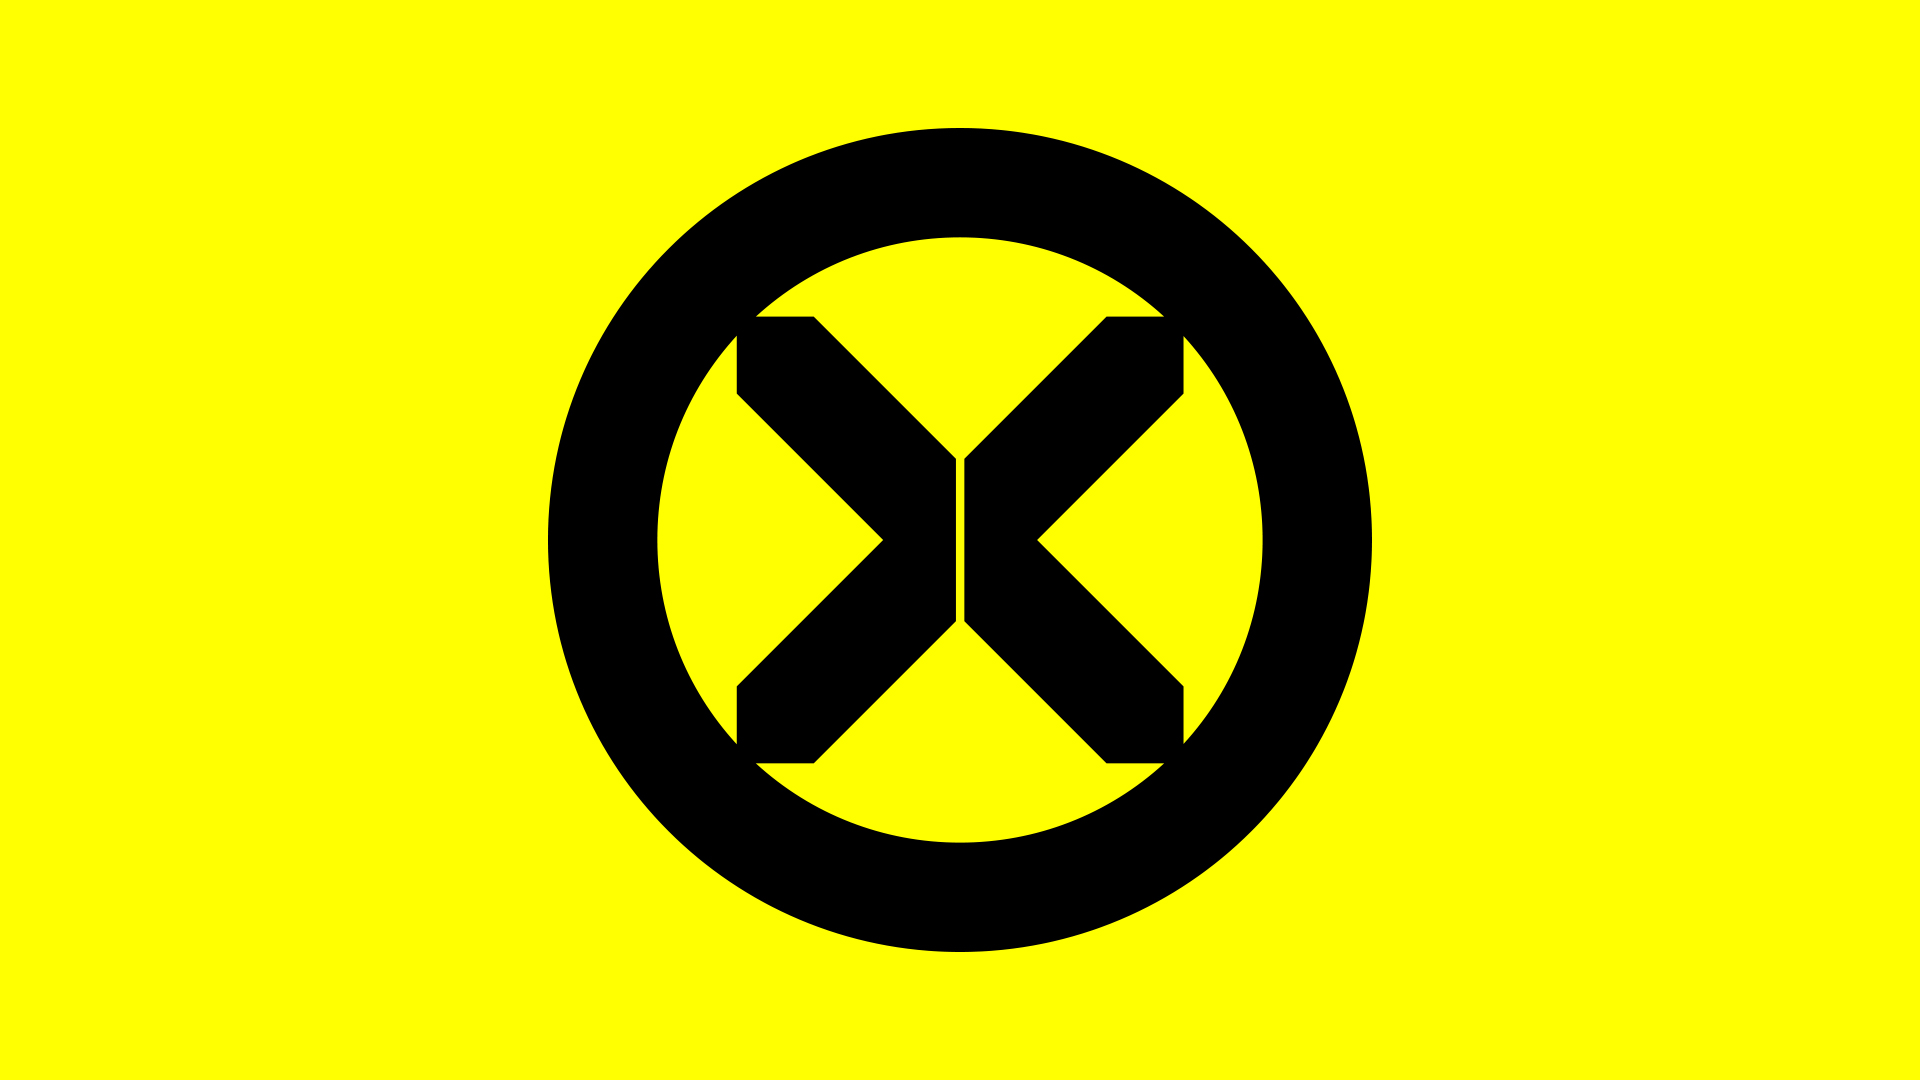 X Men Logo Wallpapers